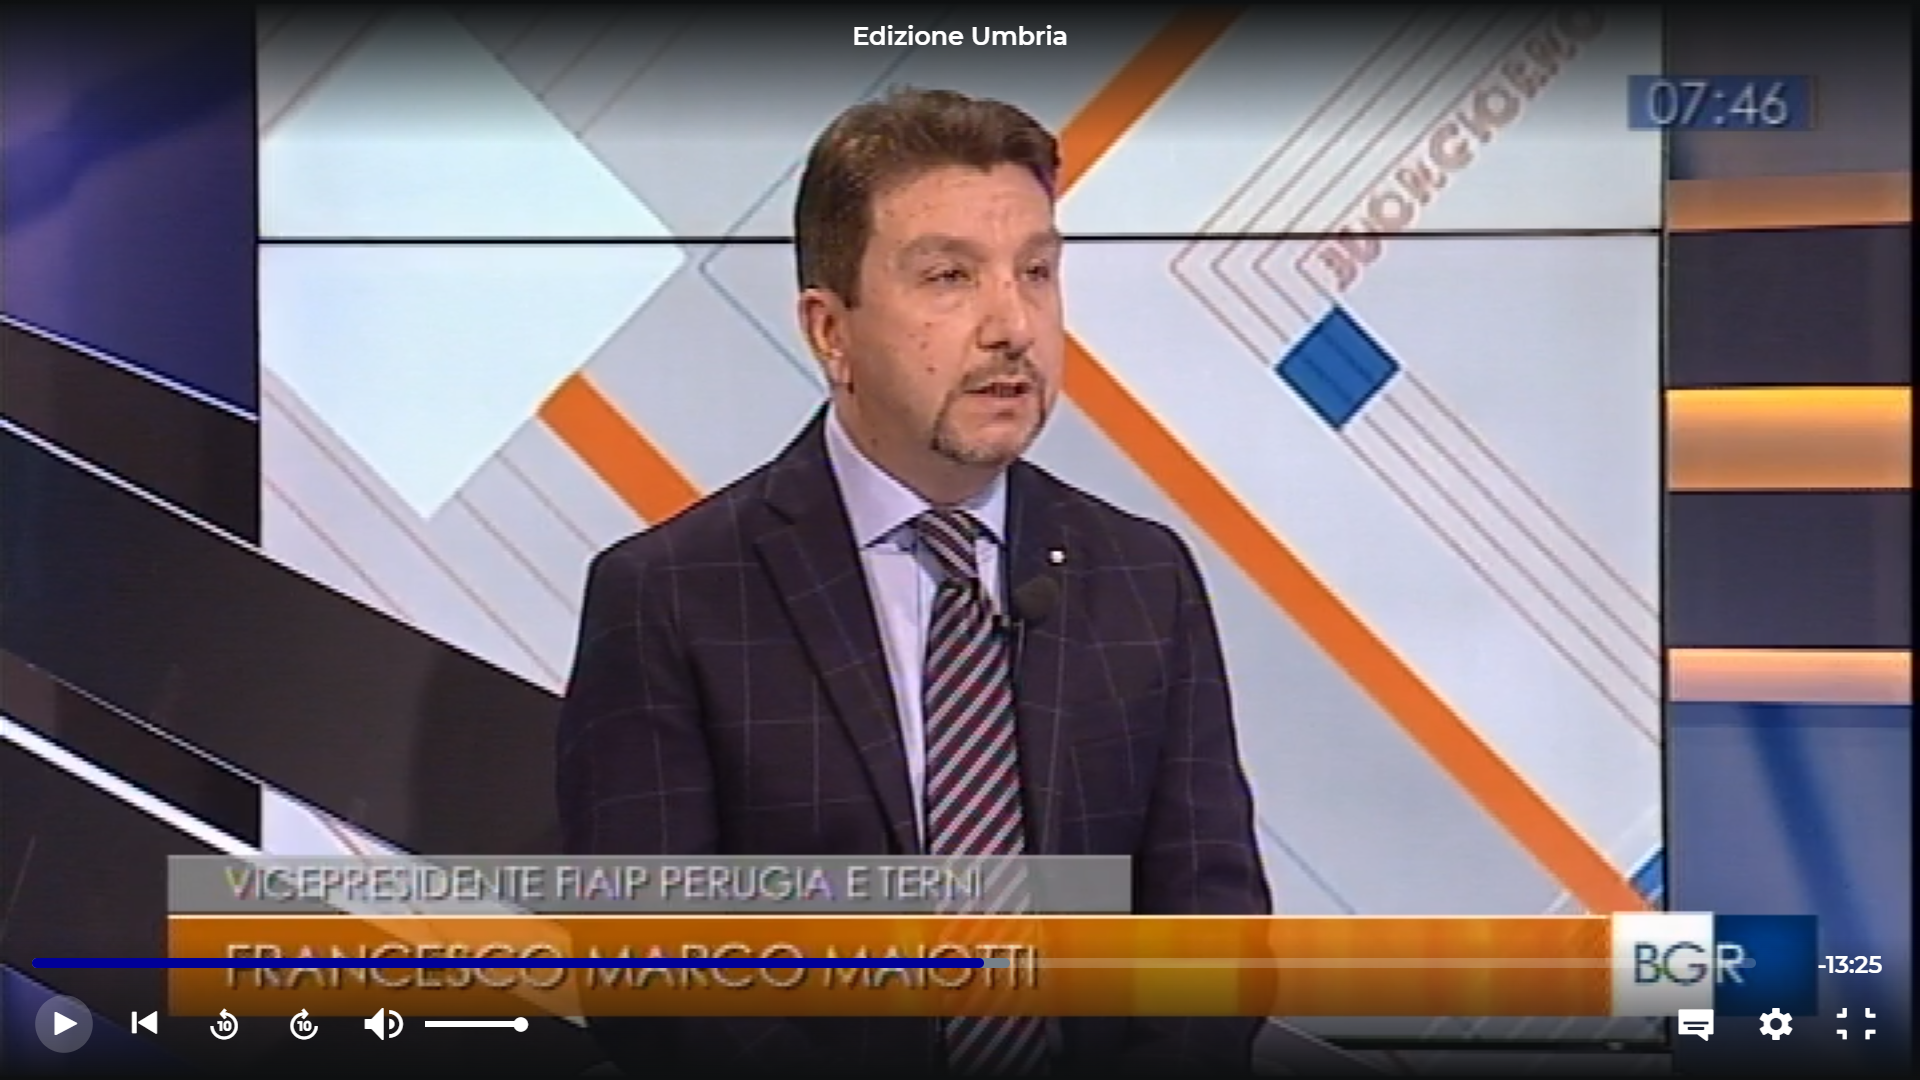 Caro Affitti, Fiaip Umbria: Intervista di Rai3 al vicepresidente Francesco Marco Maiotti